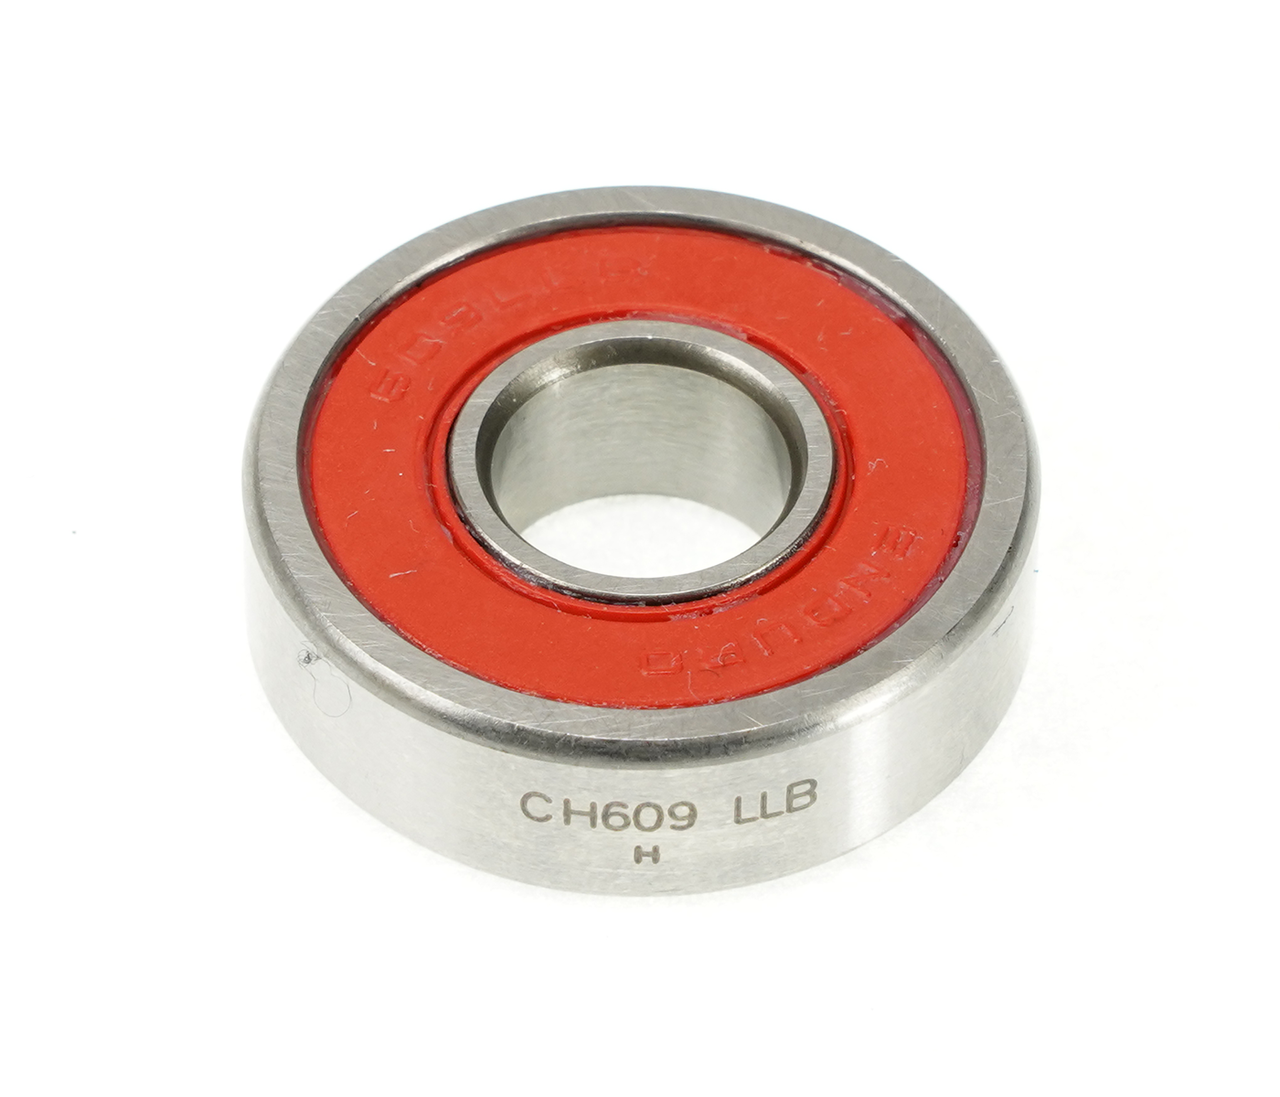 Enduro CH 609 LLB - Ceramic-Hybrid, ABEC-5 Radial Bearing (C3 Clearance) - 9mm x 24mm x 7mm